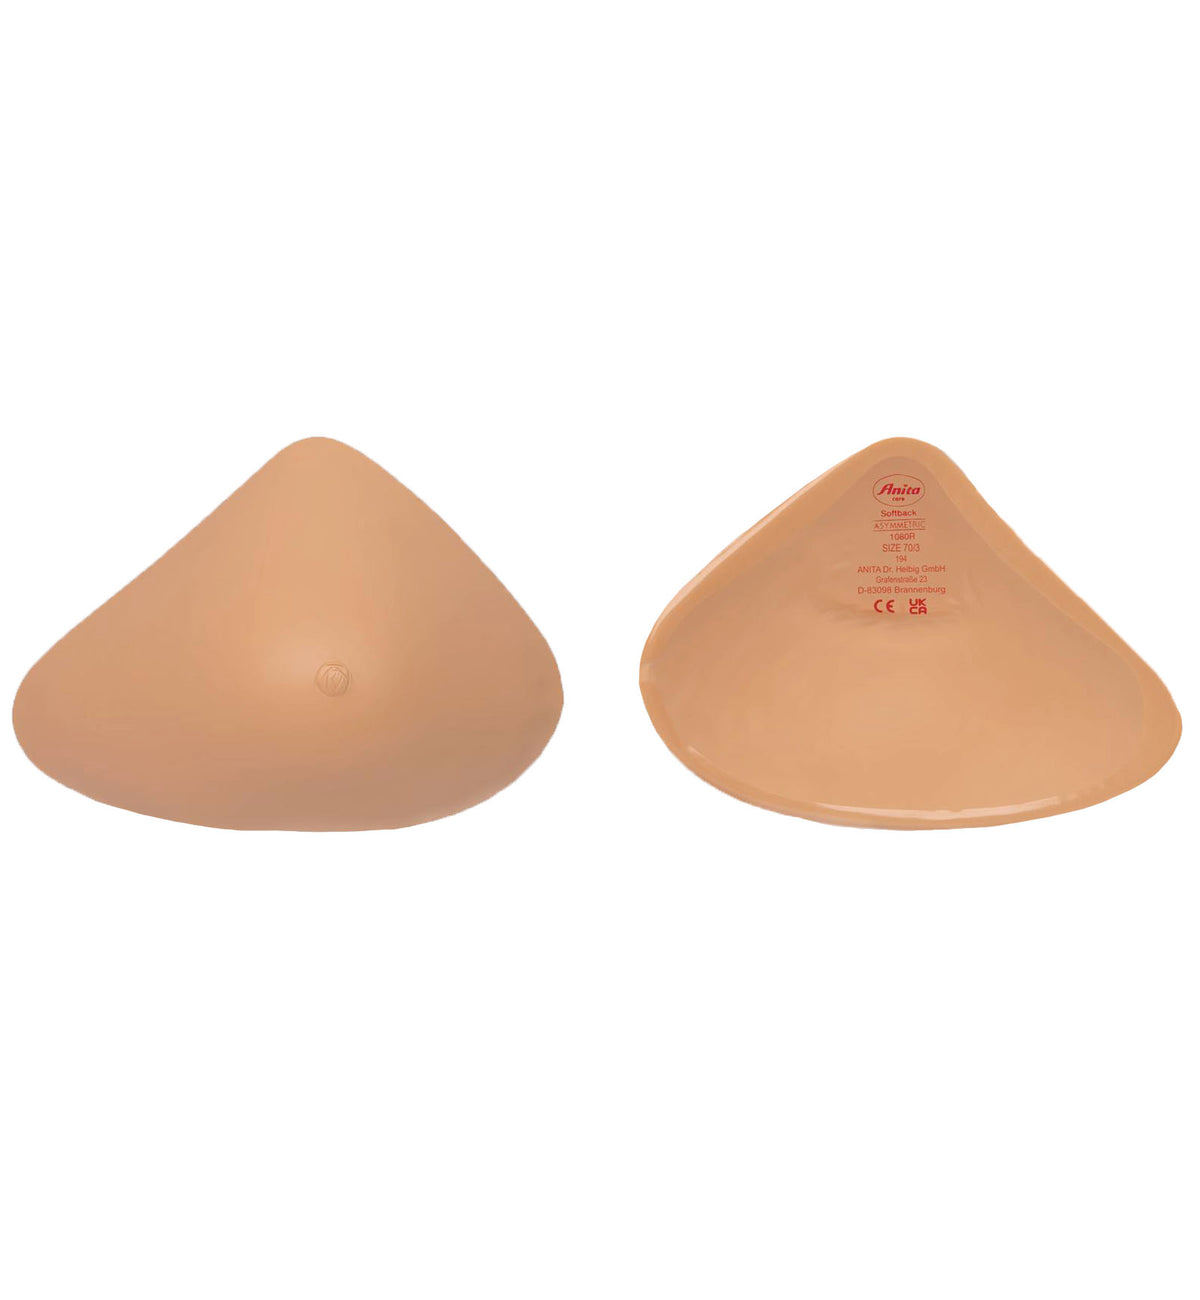 Anita Care Softback Asymmetric Double Layer Breast Form (1080R),Size 8,Right - Right,8